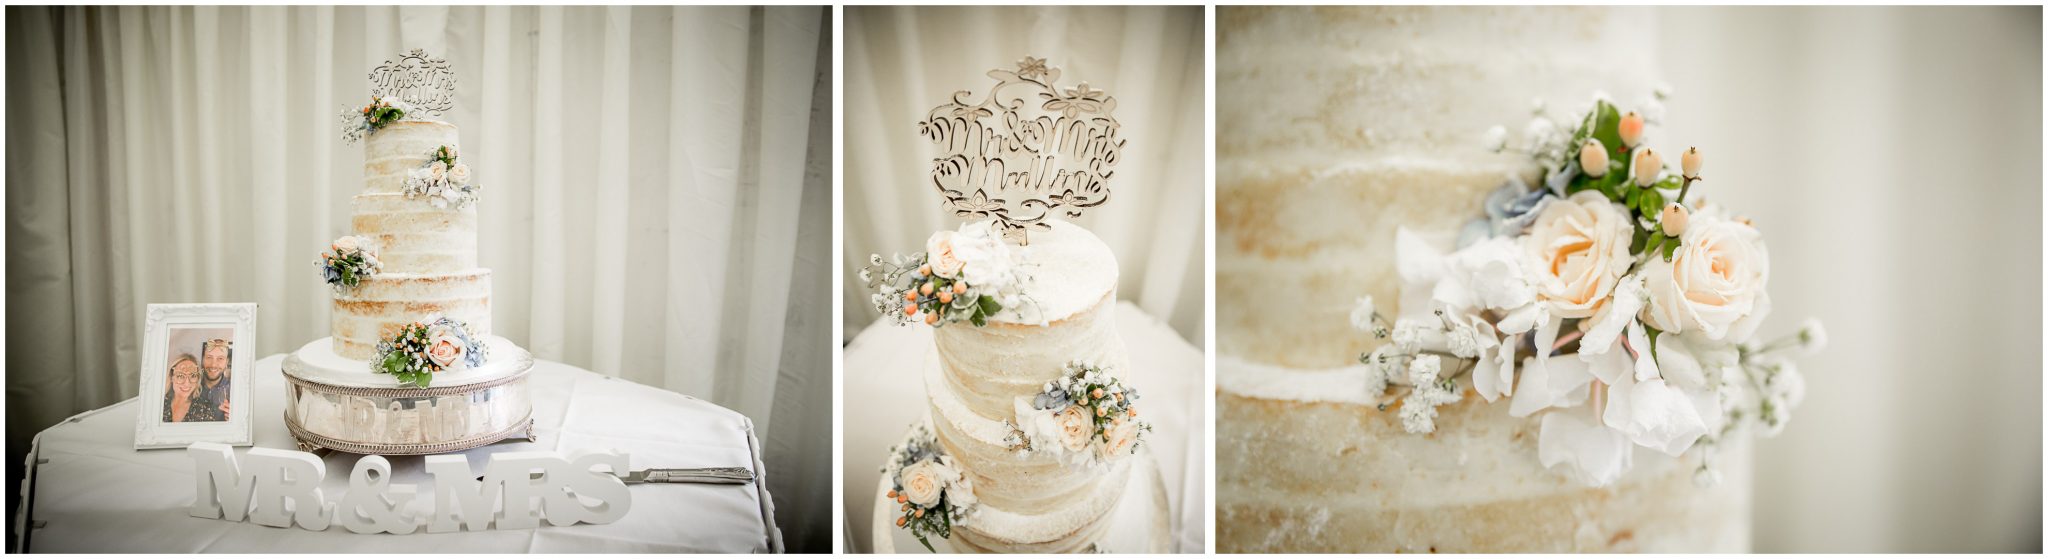 Oakley Hall wedding photography cake details